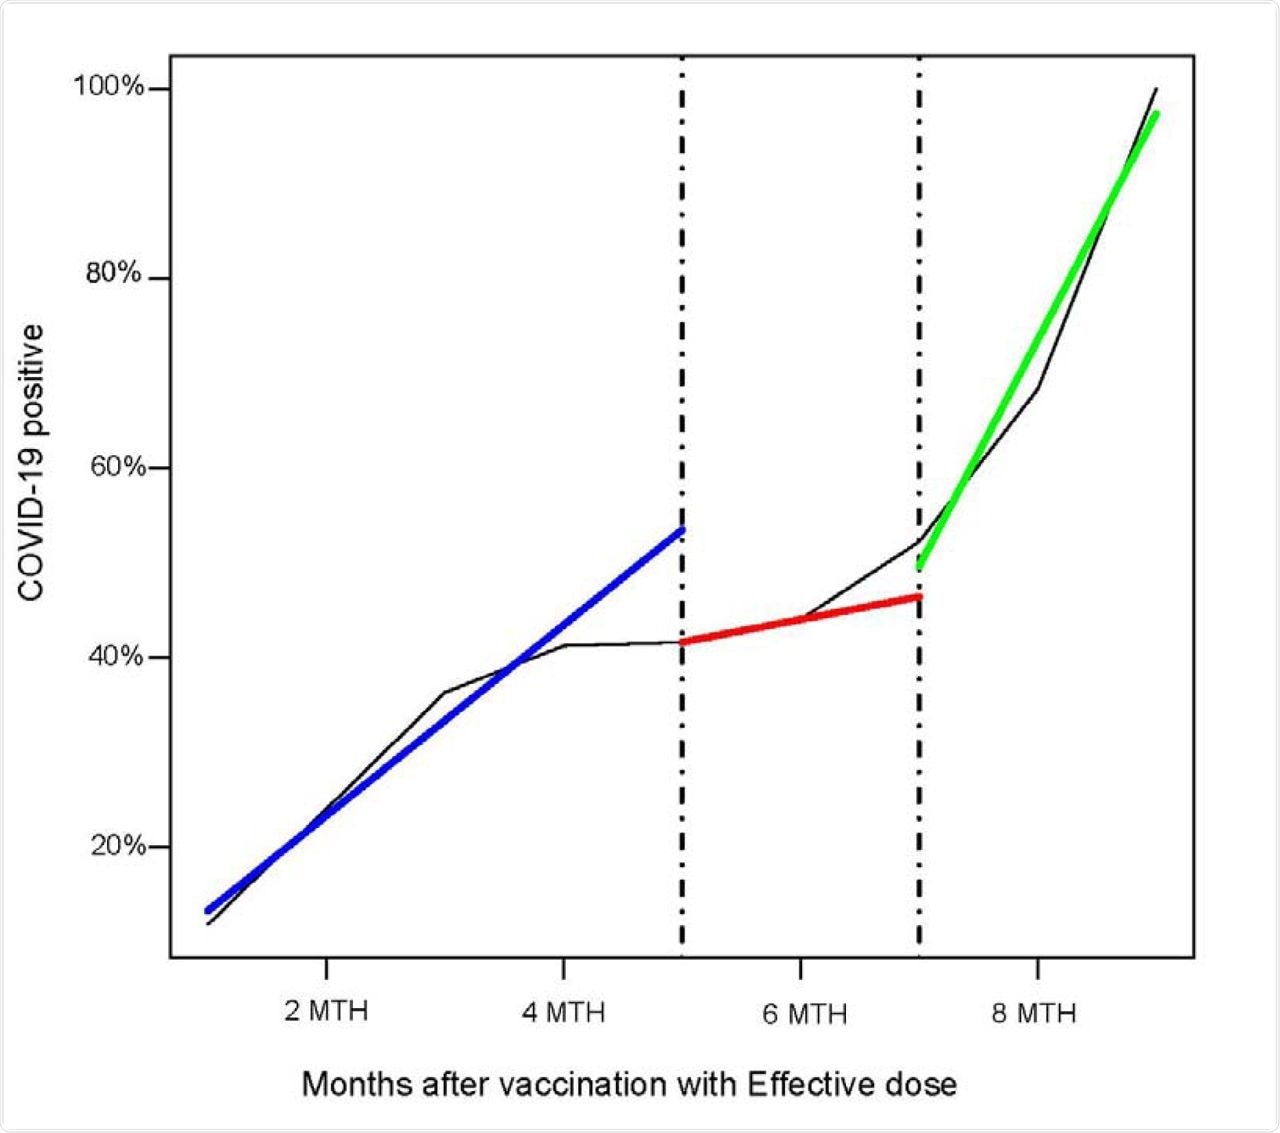 Segmented linear regression models